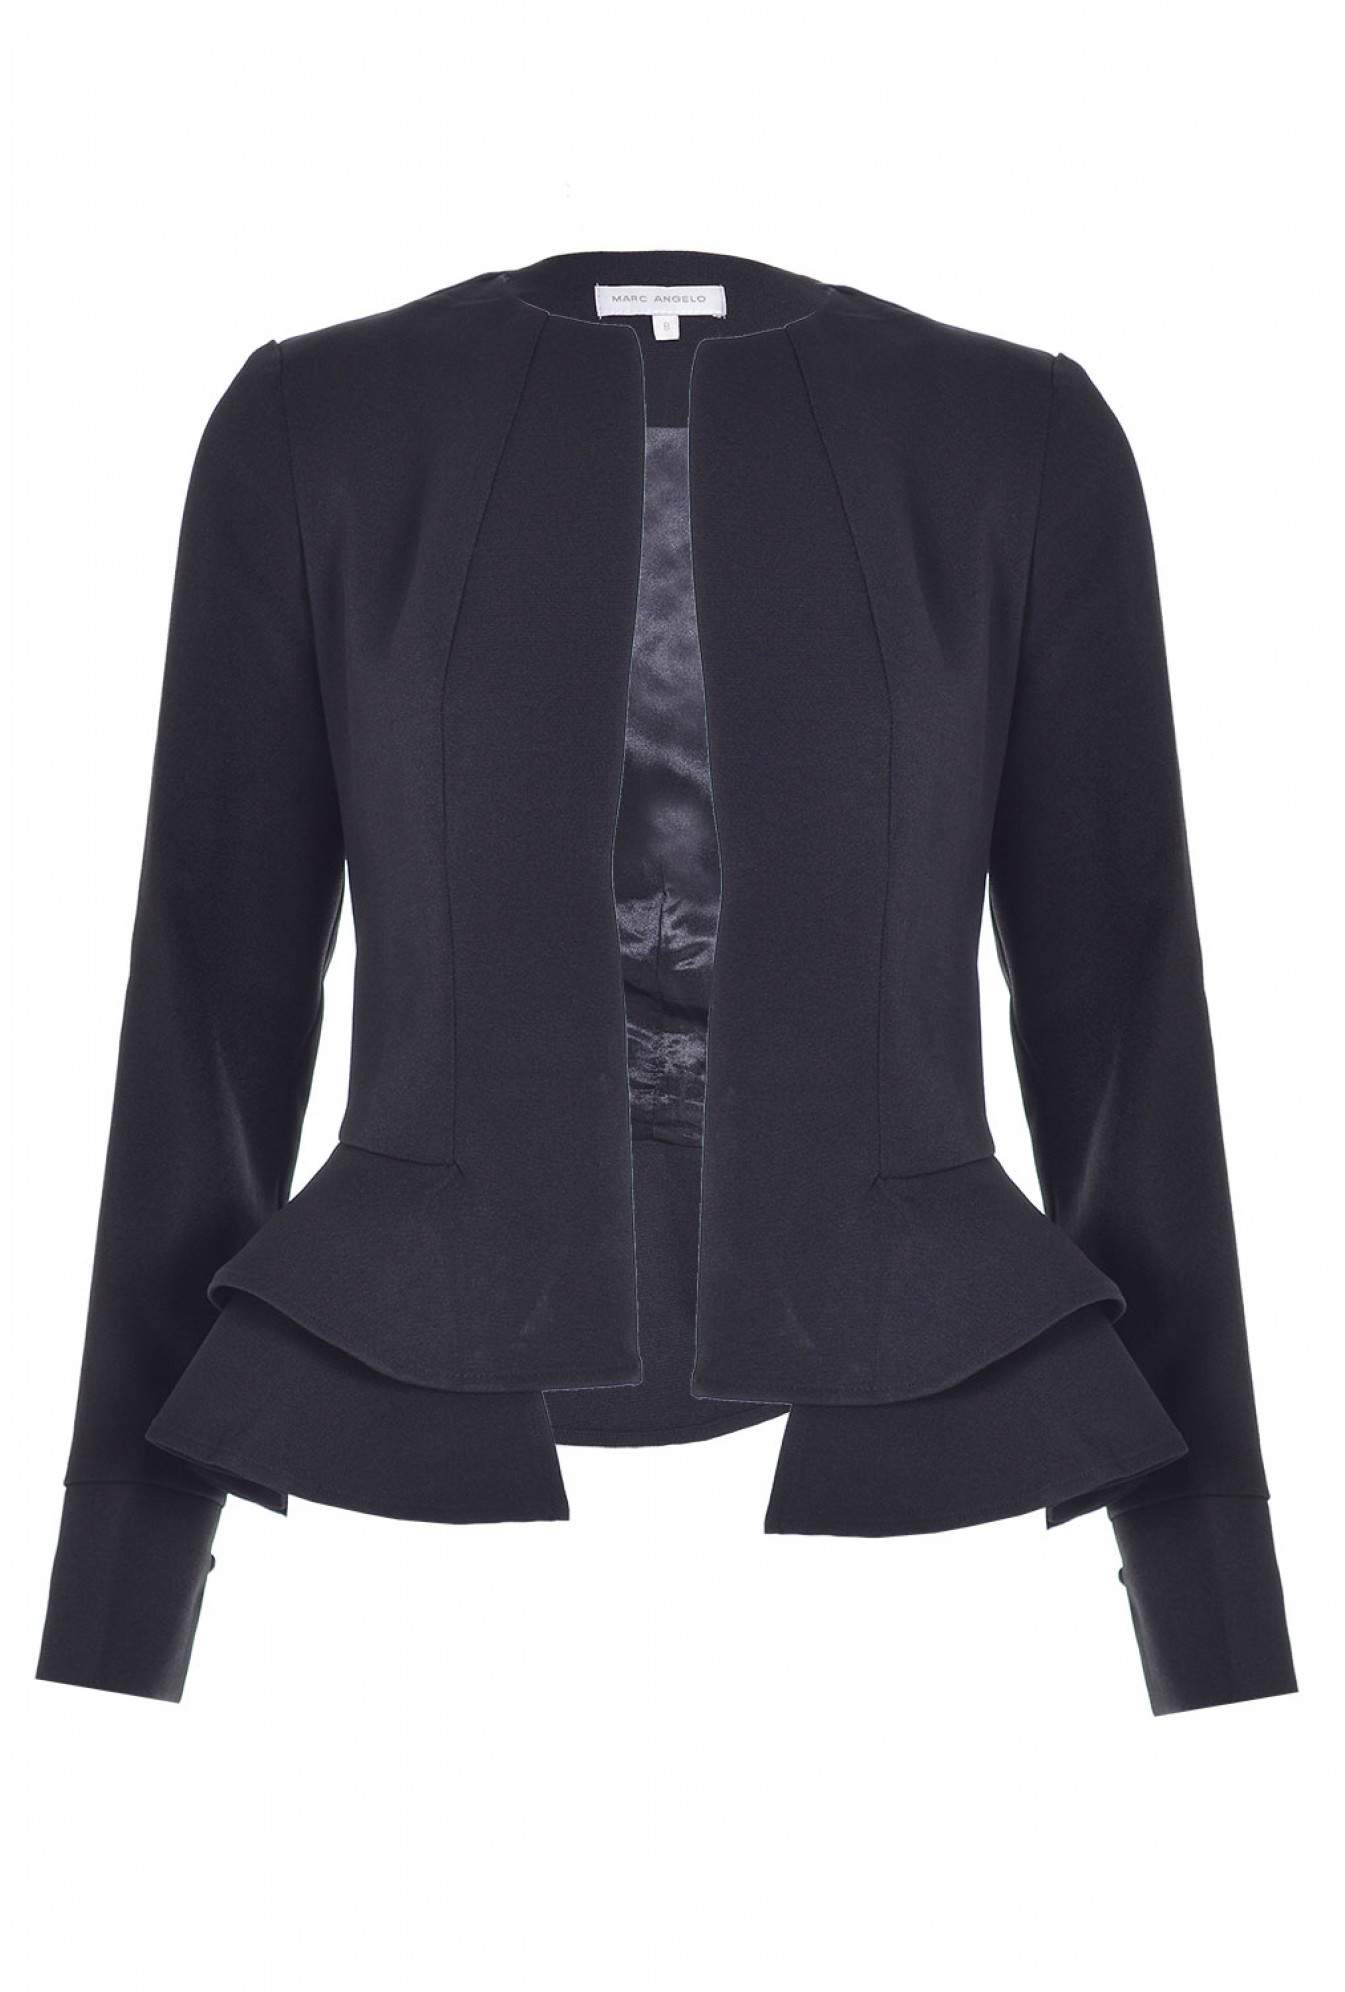 Marc Angelo Lana Frill Jacket in Black | iCLOTHING